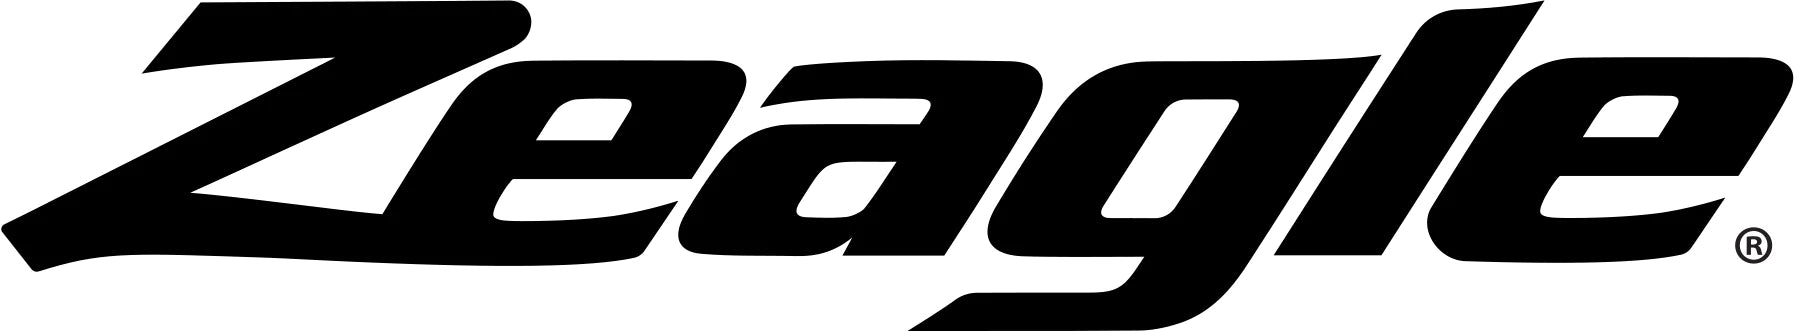 zeagle logo